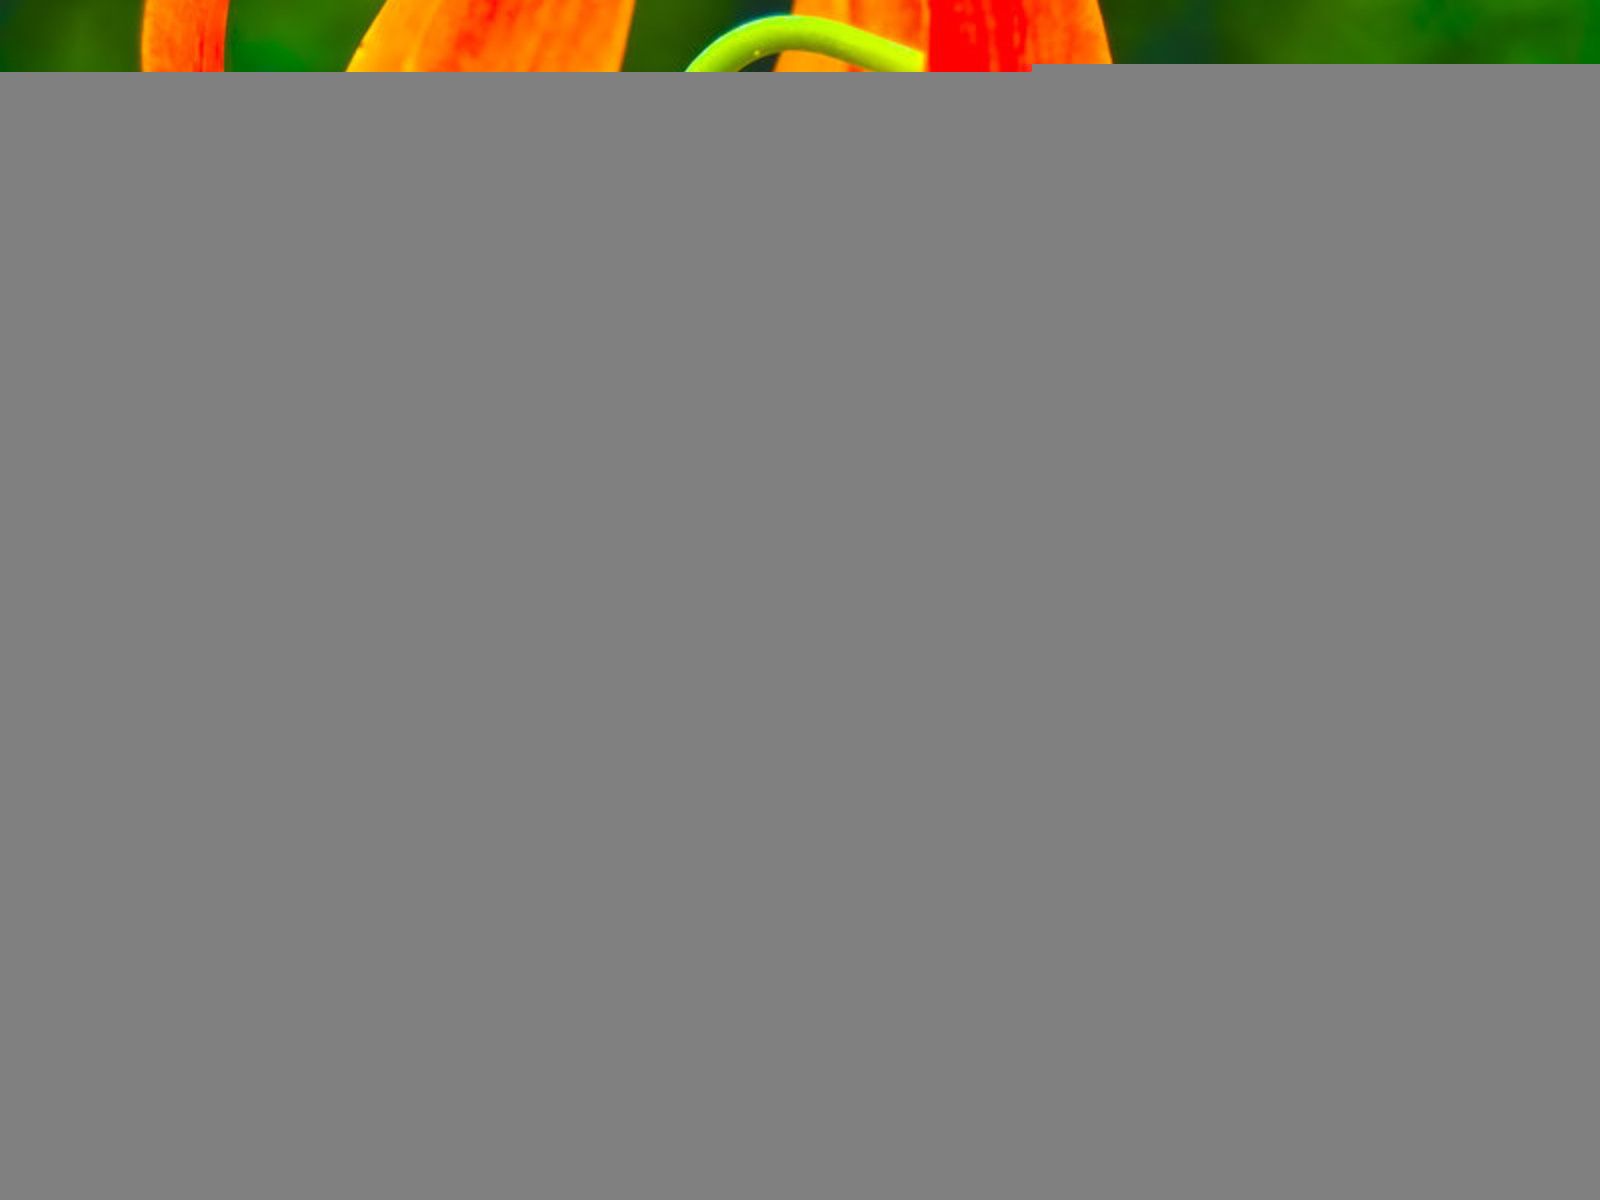 Nature wallpaper - iPhone 5 (640x1136) | Wallpaper free hd ...